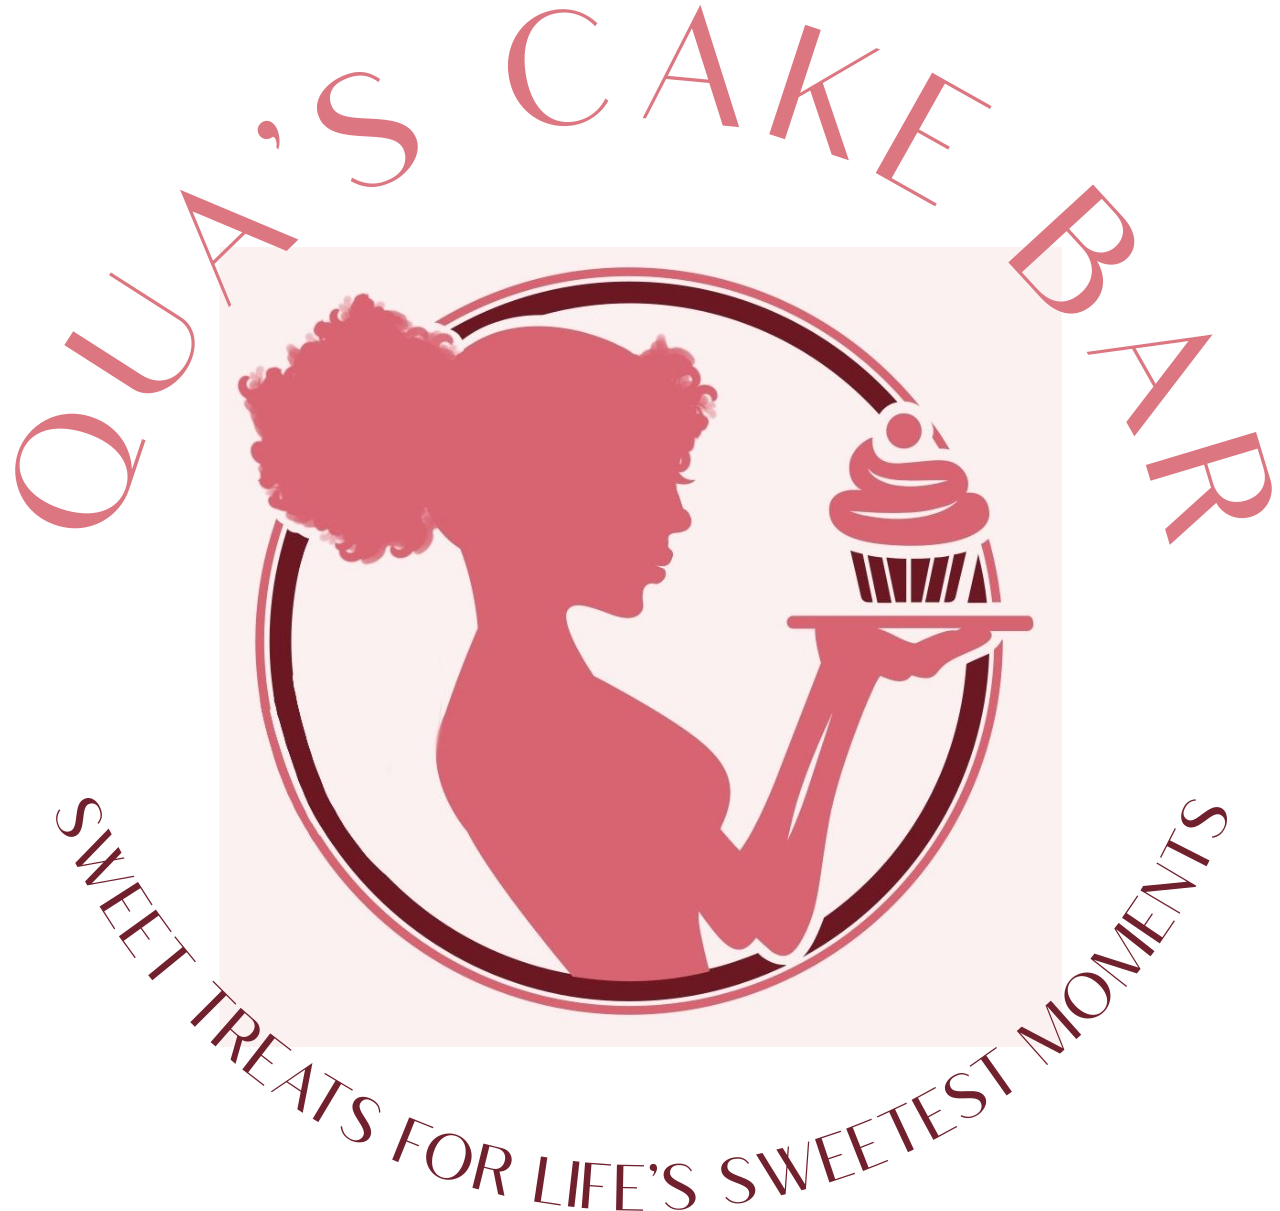 Qua's Cake Bar's web page